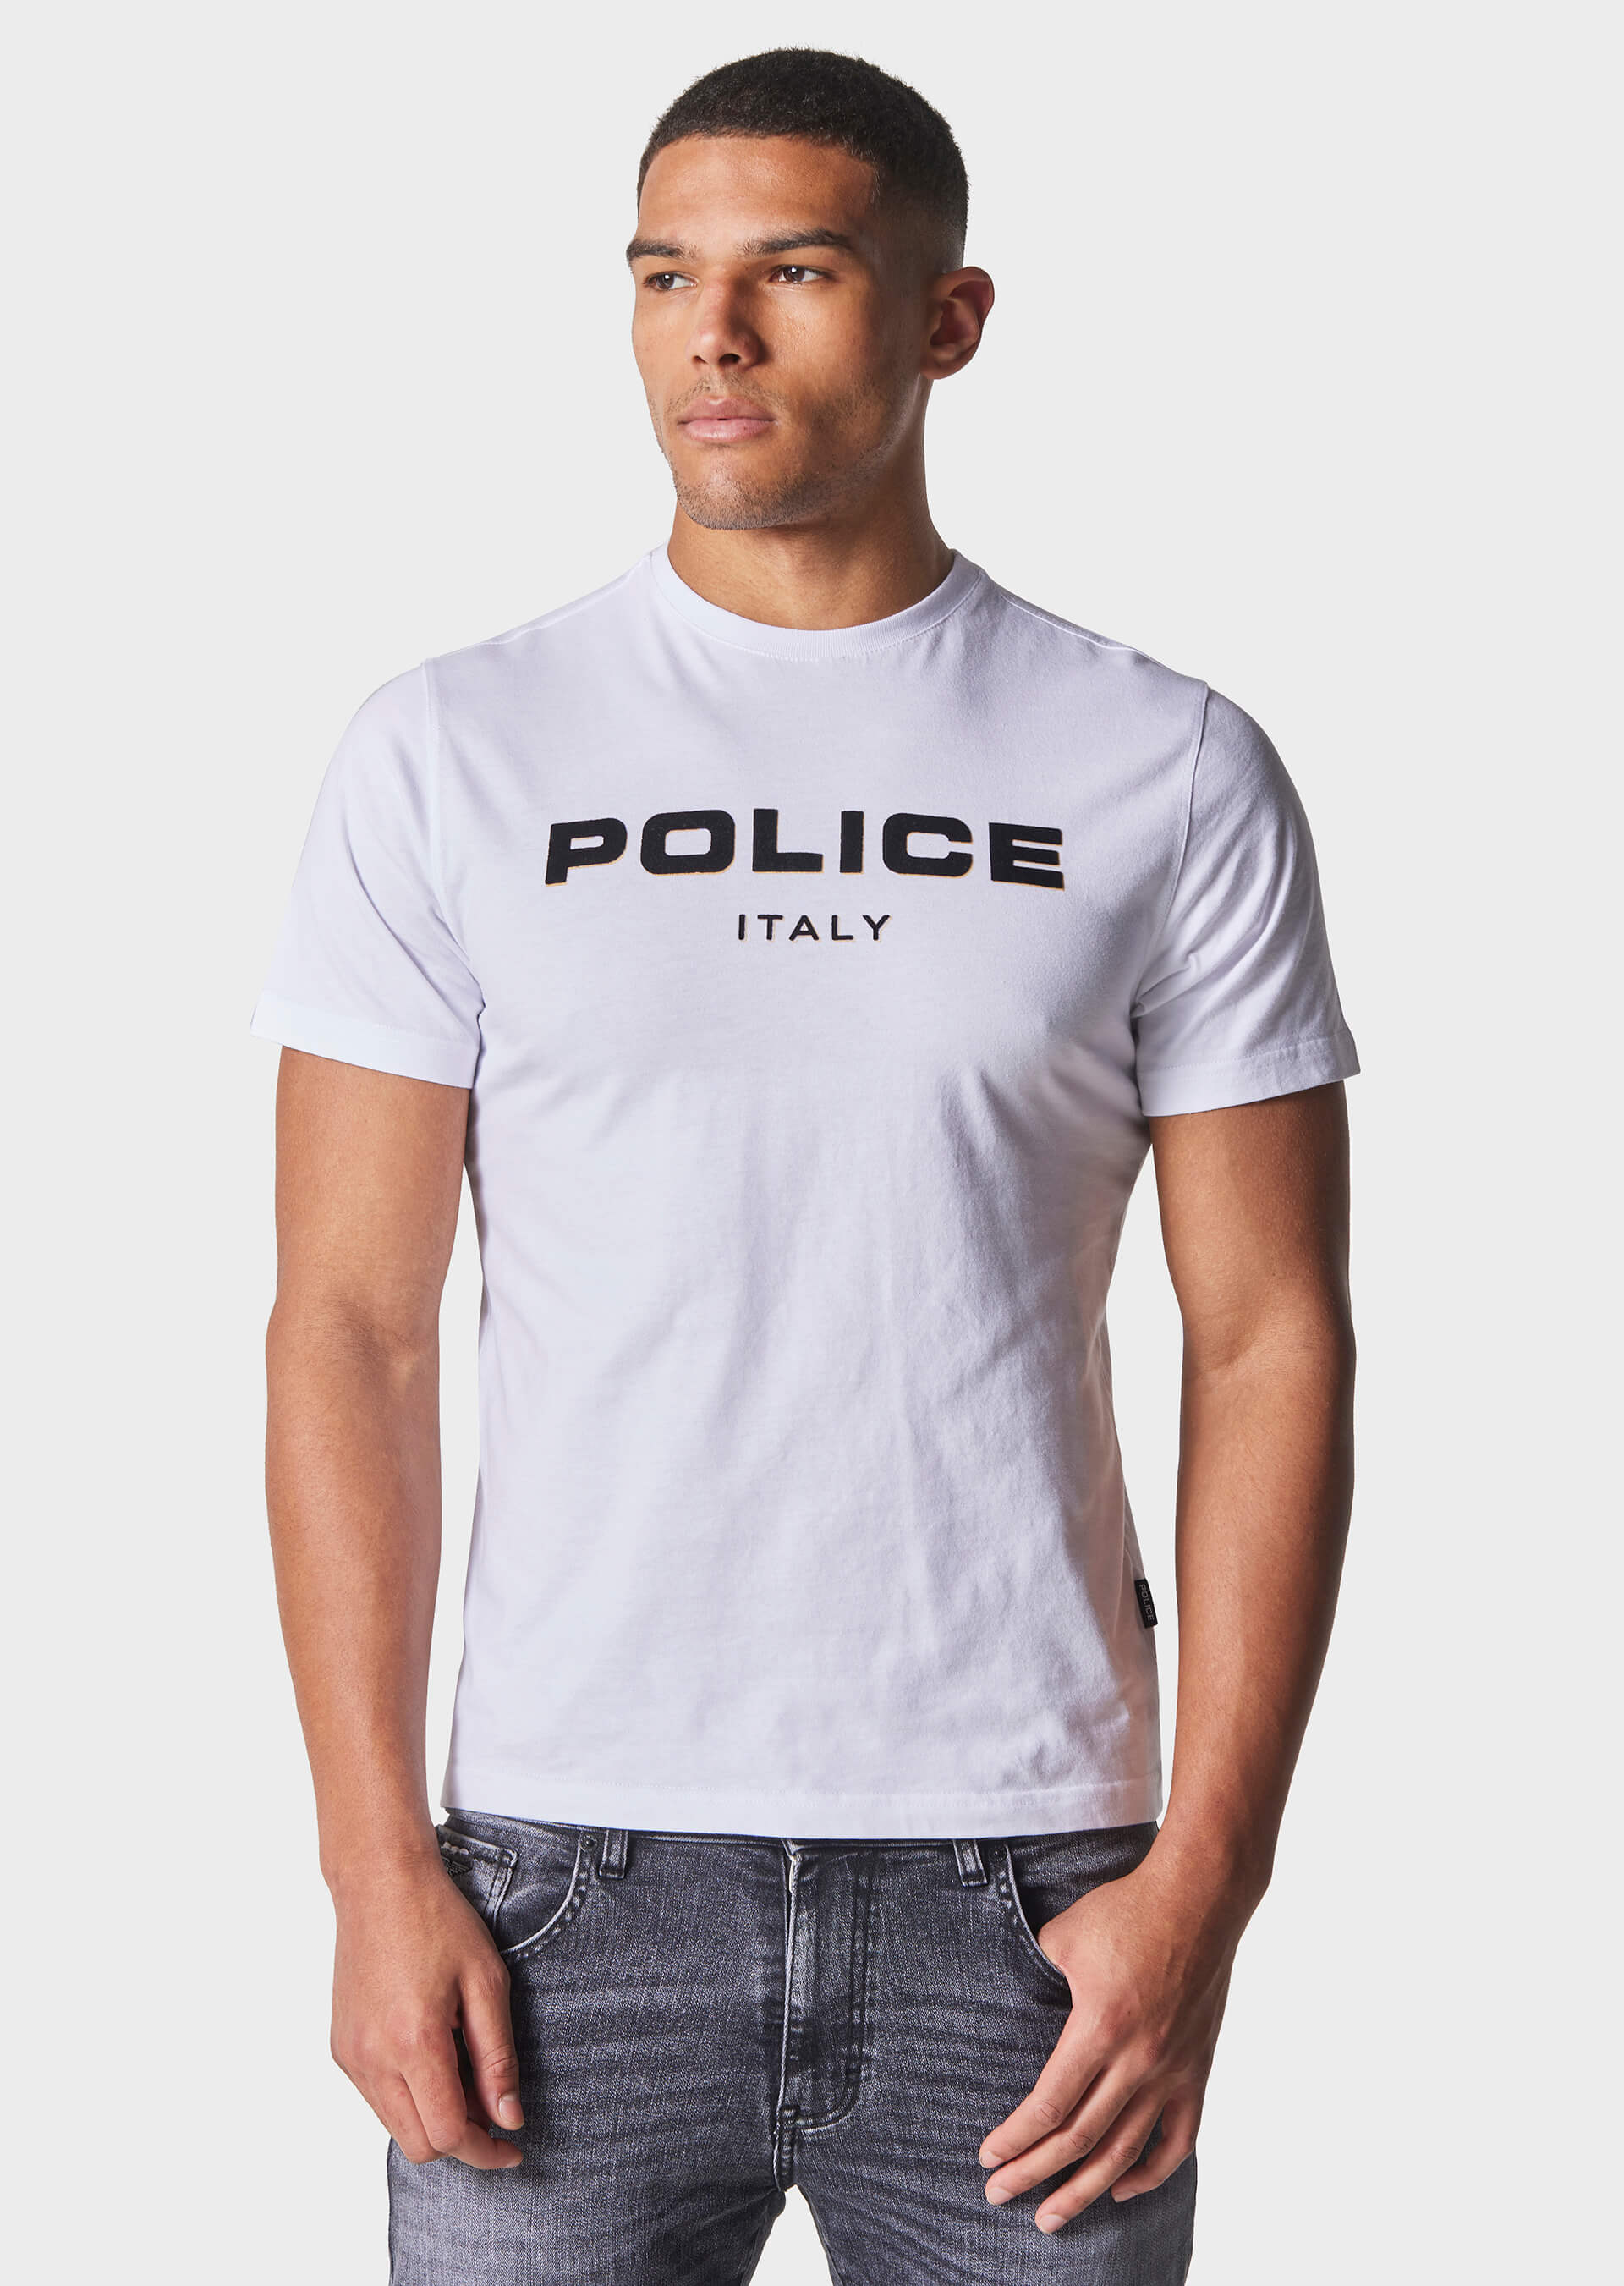 883 POLICE SILVIO T-SHIRT - WHITE